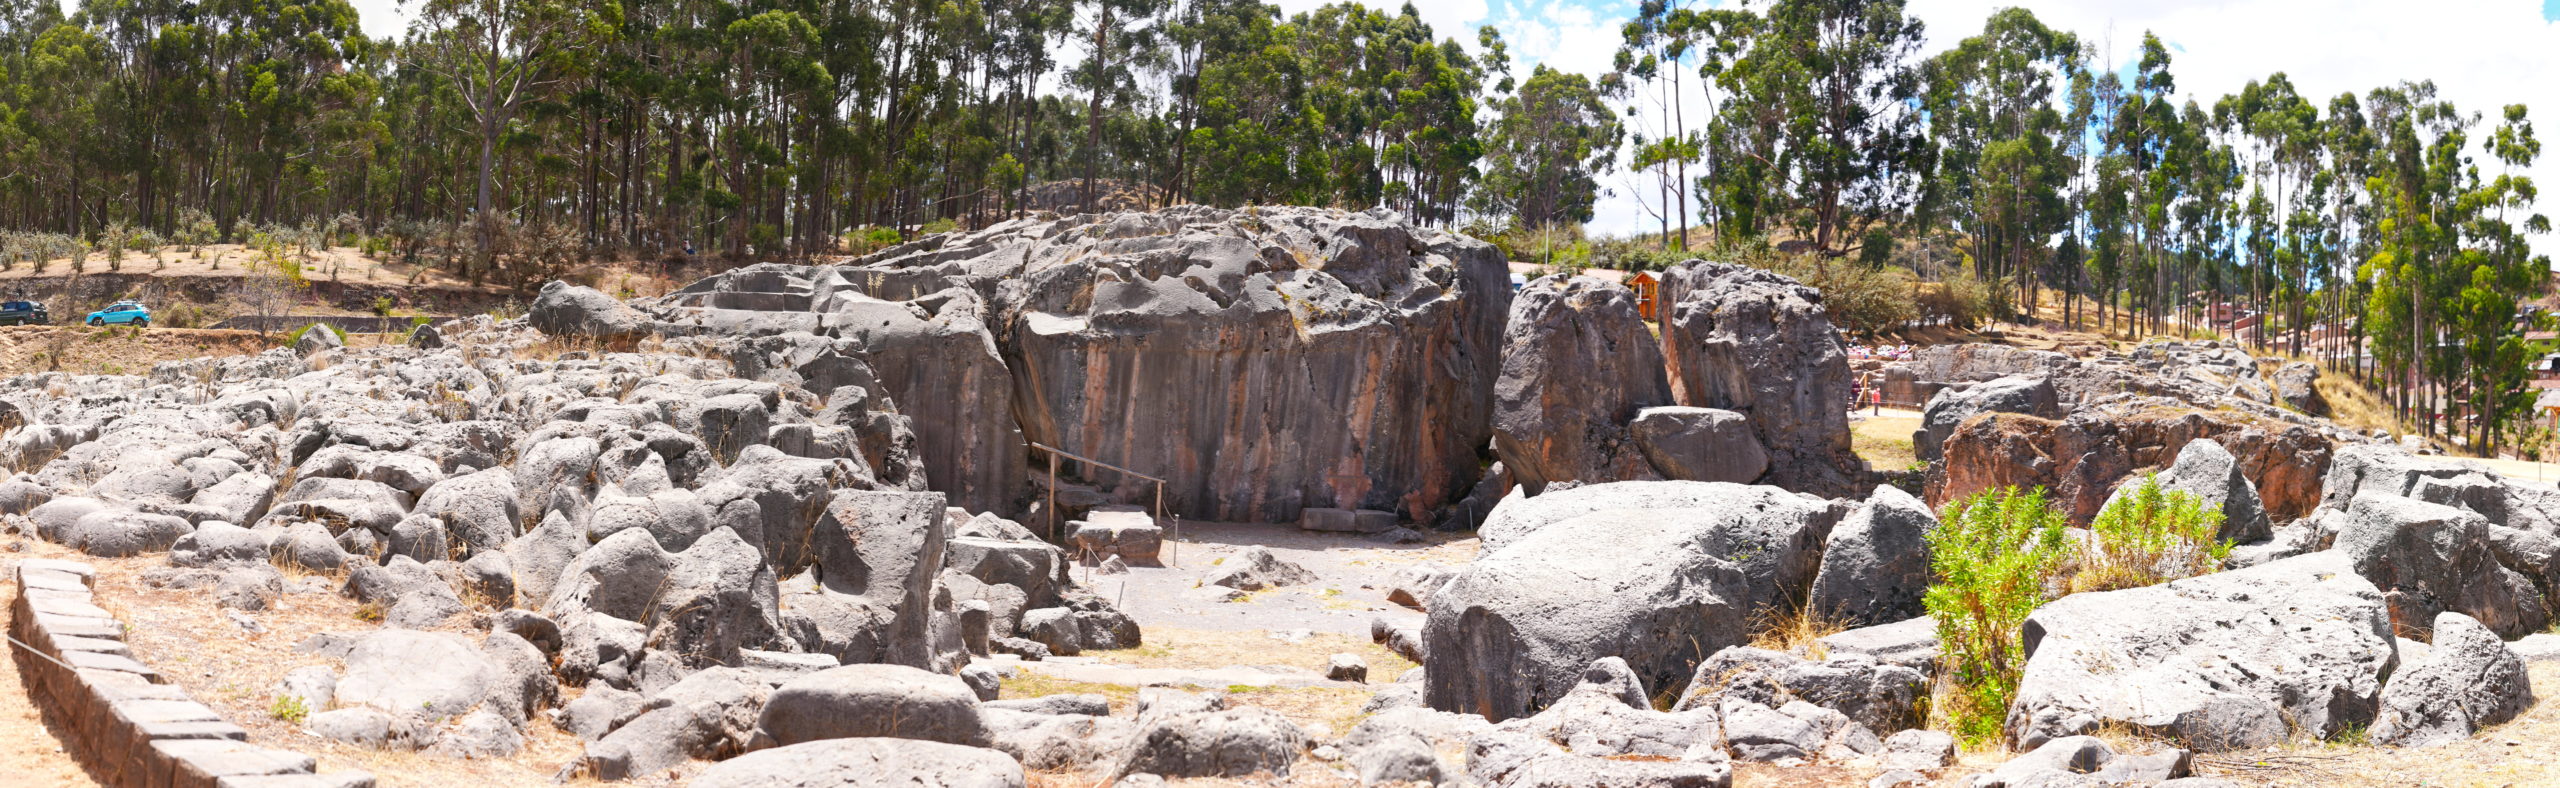 The local rock quarry.